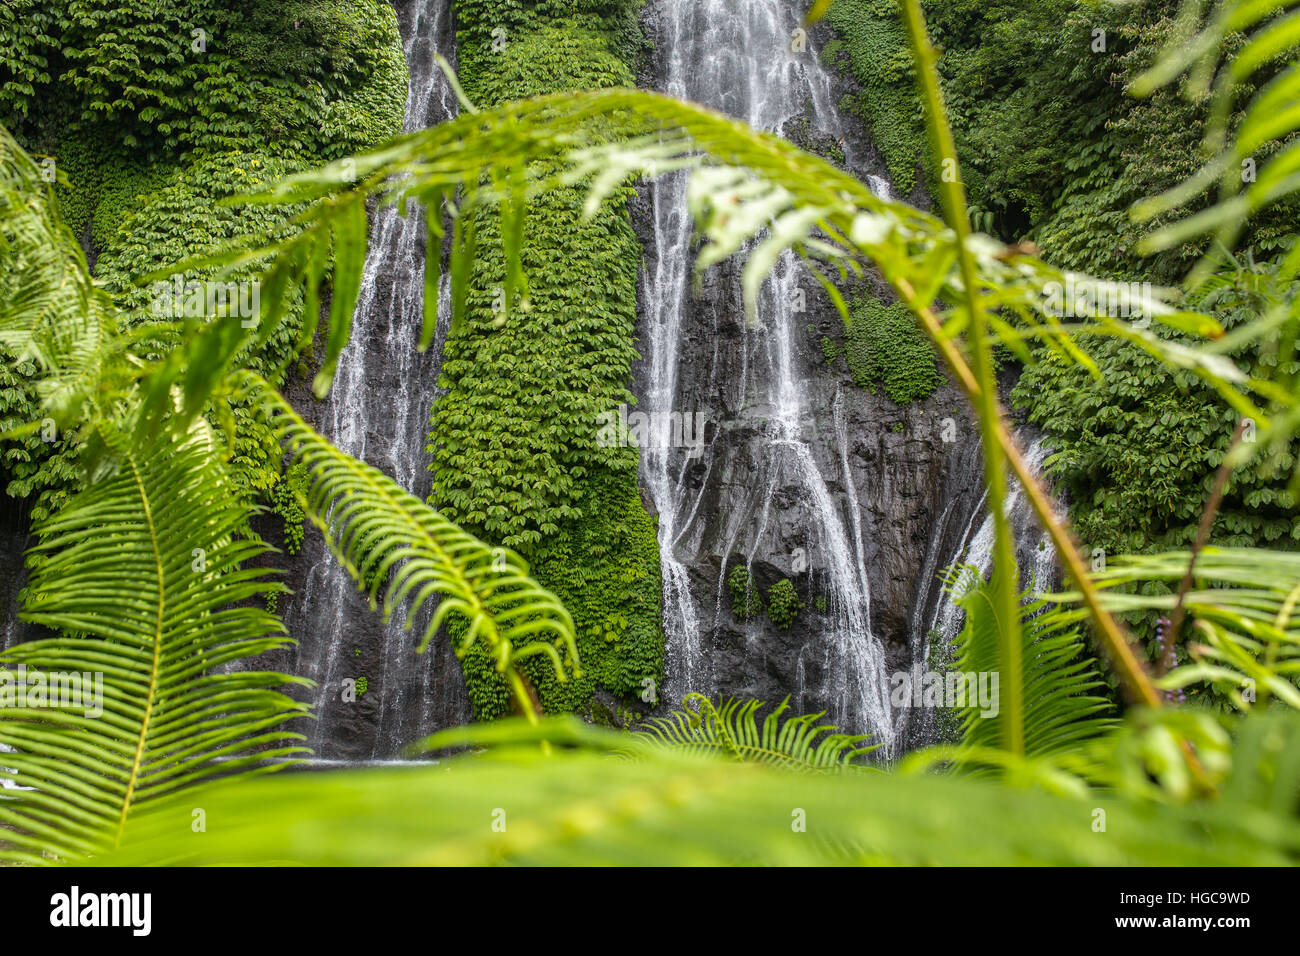 Young fern leaf close-up with a Beautiful Banyumala Waterfall on background, Bali, Indonesia Stock Photo